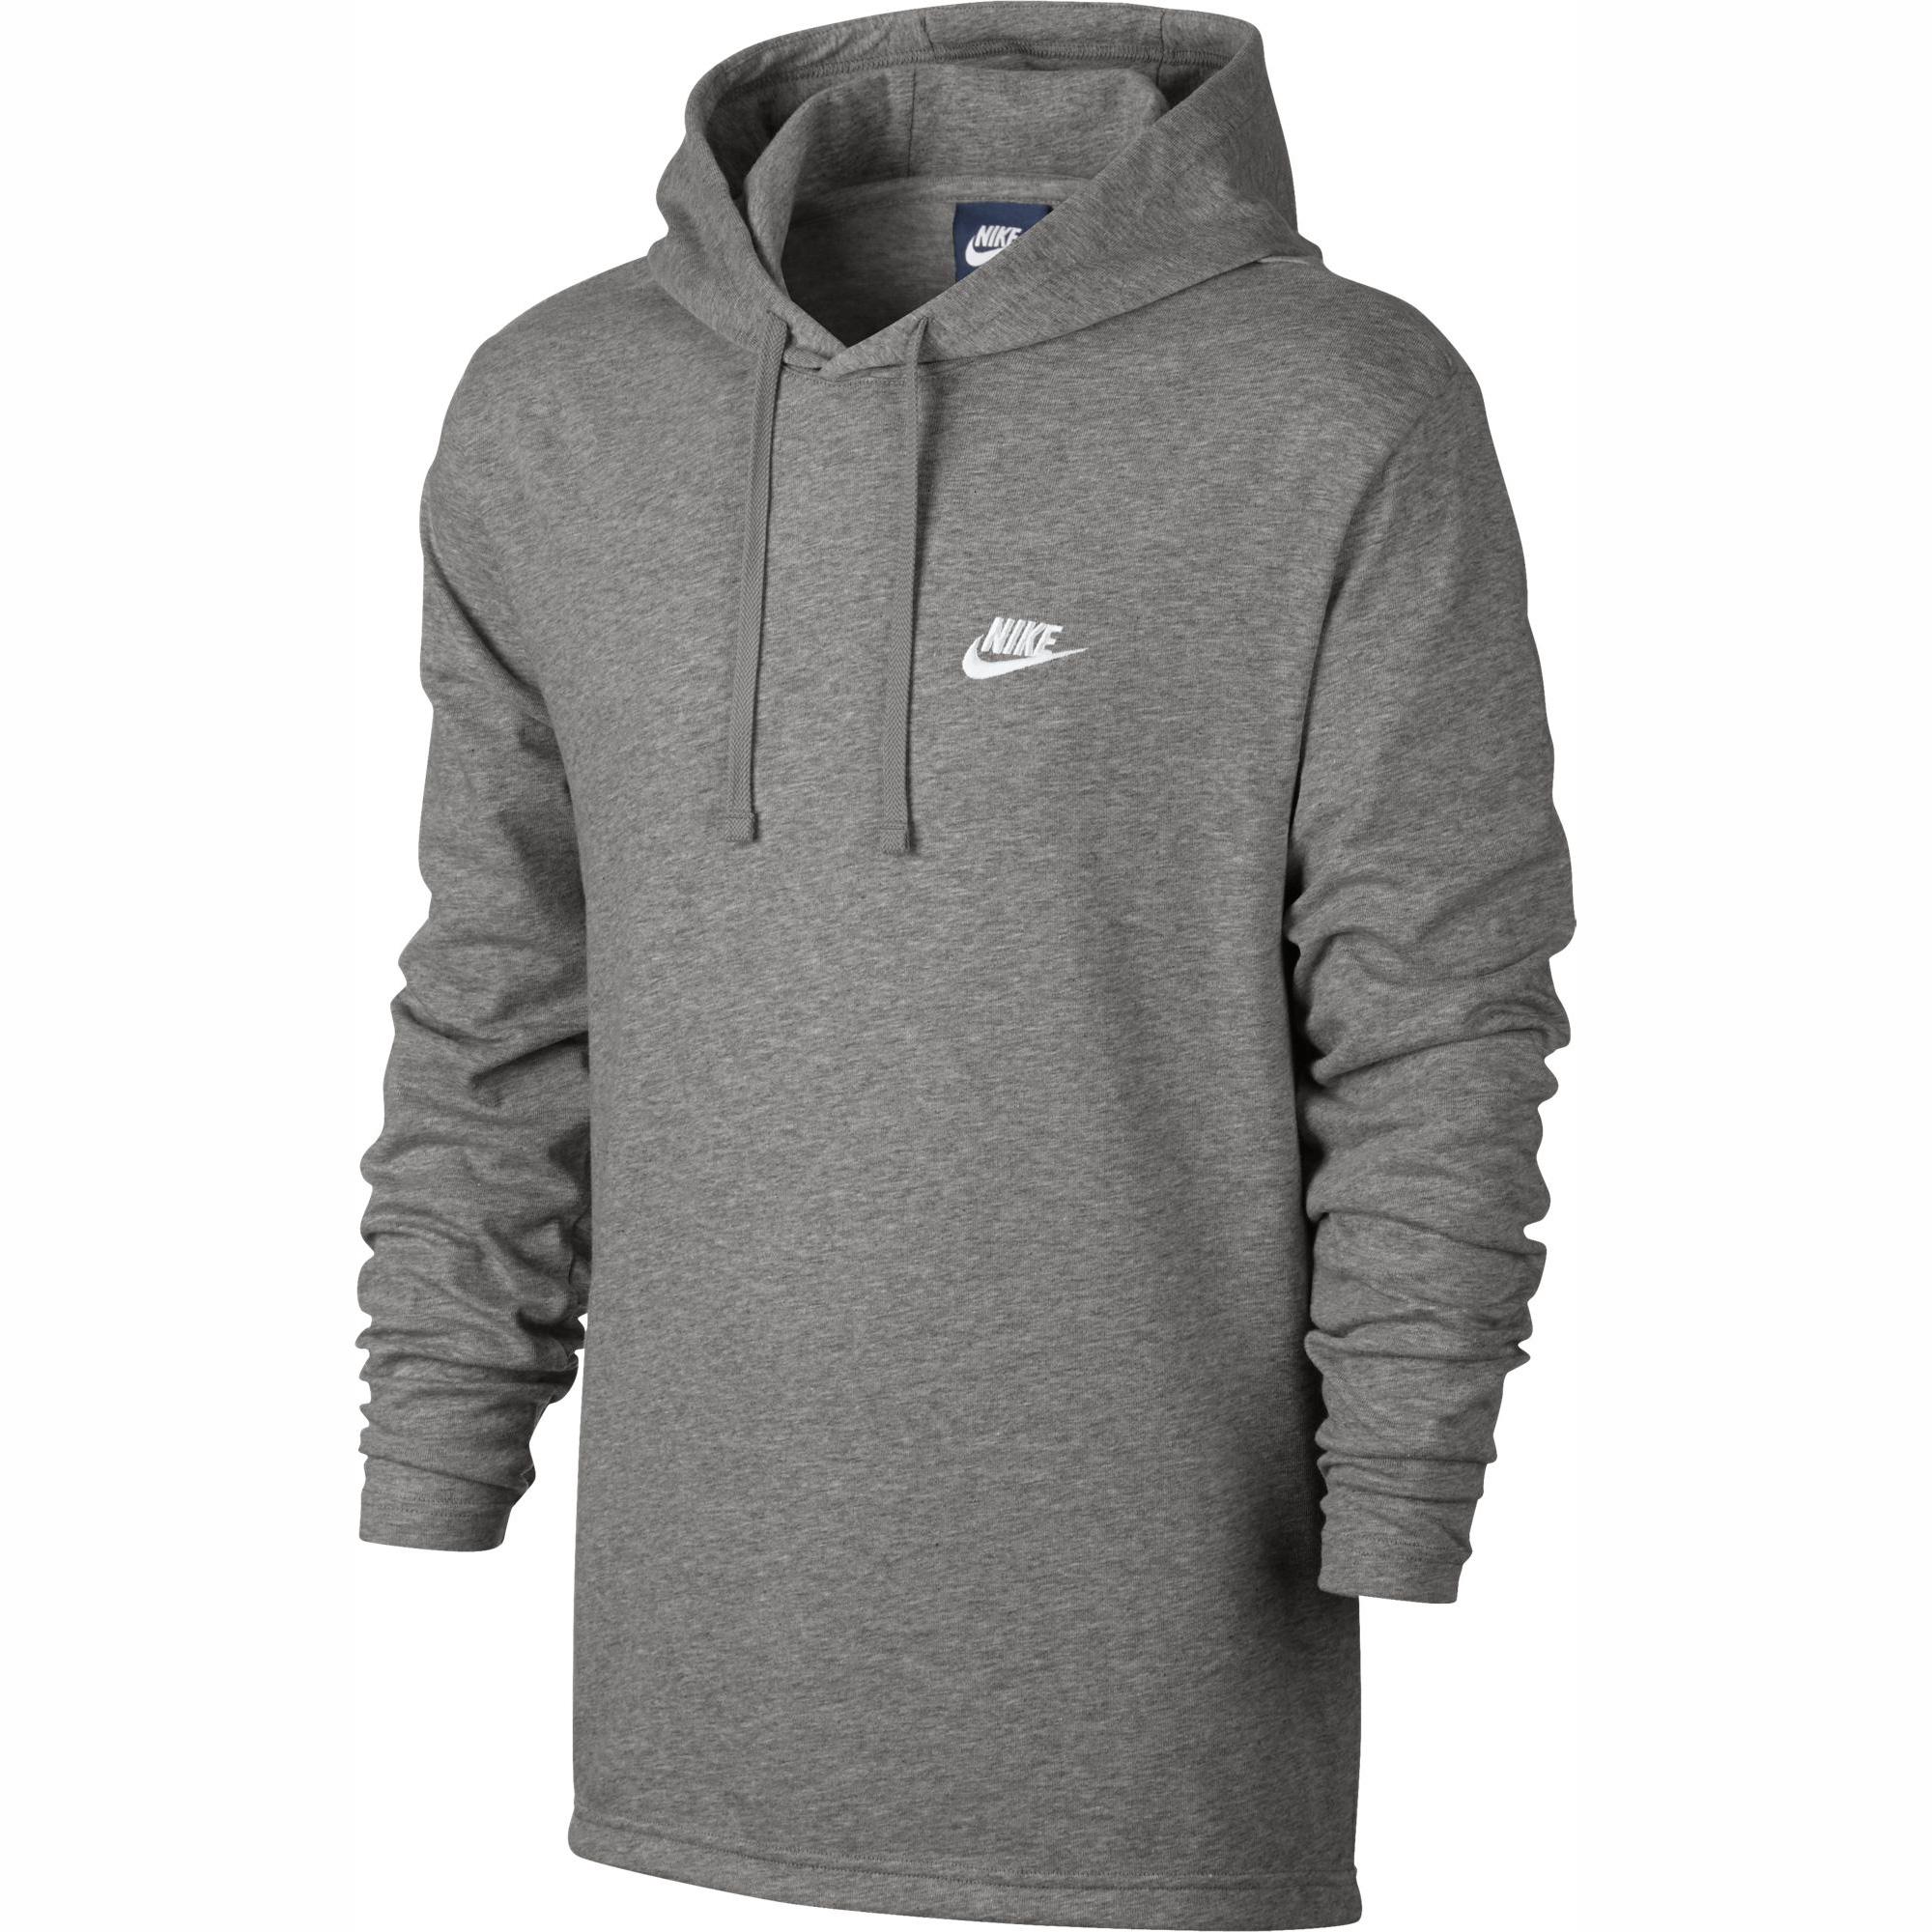 Nike Mens Sportswear Hoodie - Dark Grey Heather - Tennisnuts.com